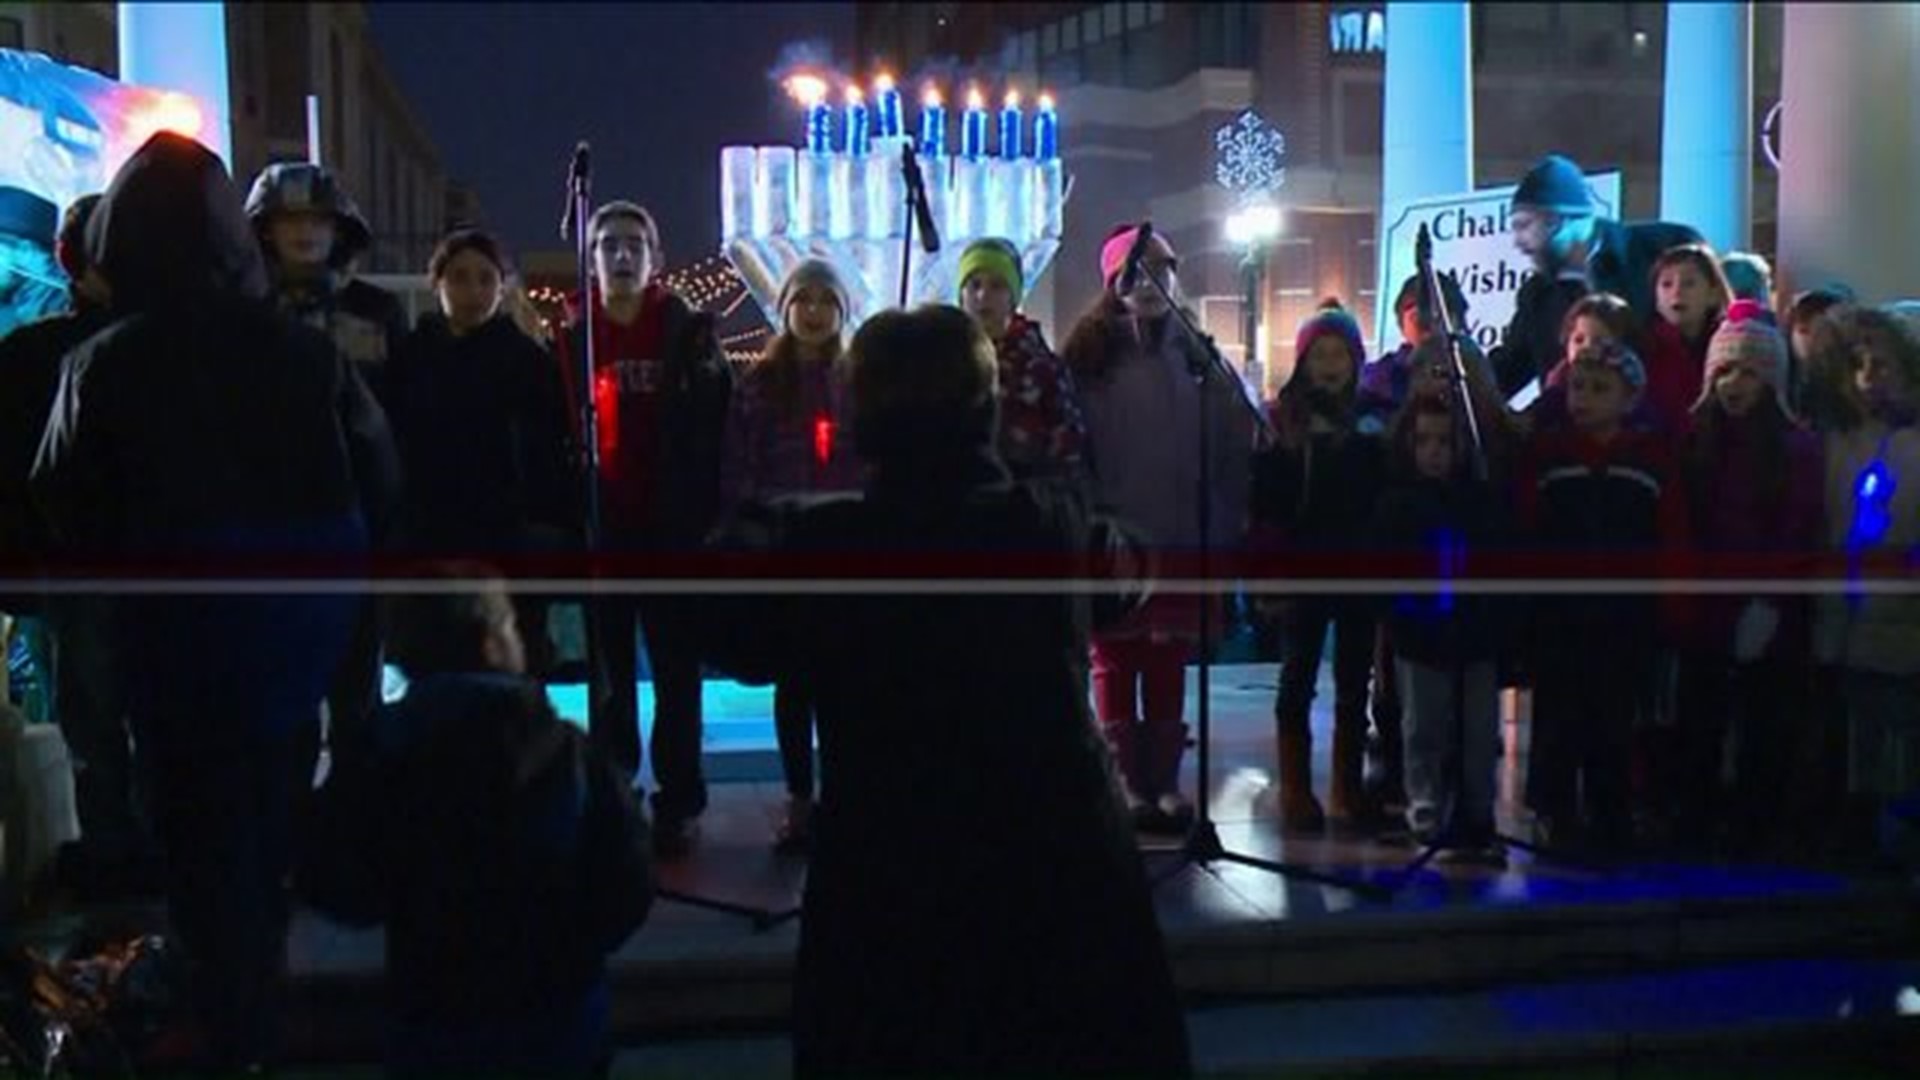 Local synogogue to celebrate Hanukkah with ice menorah